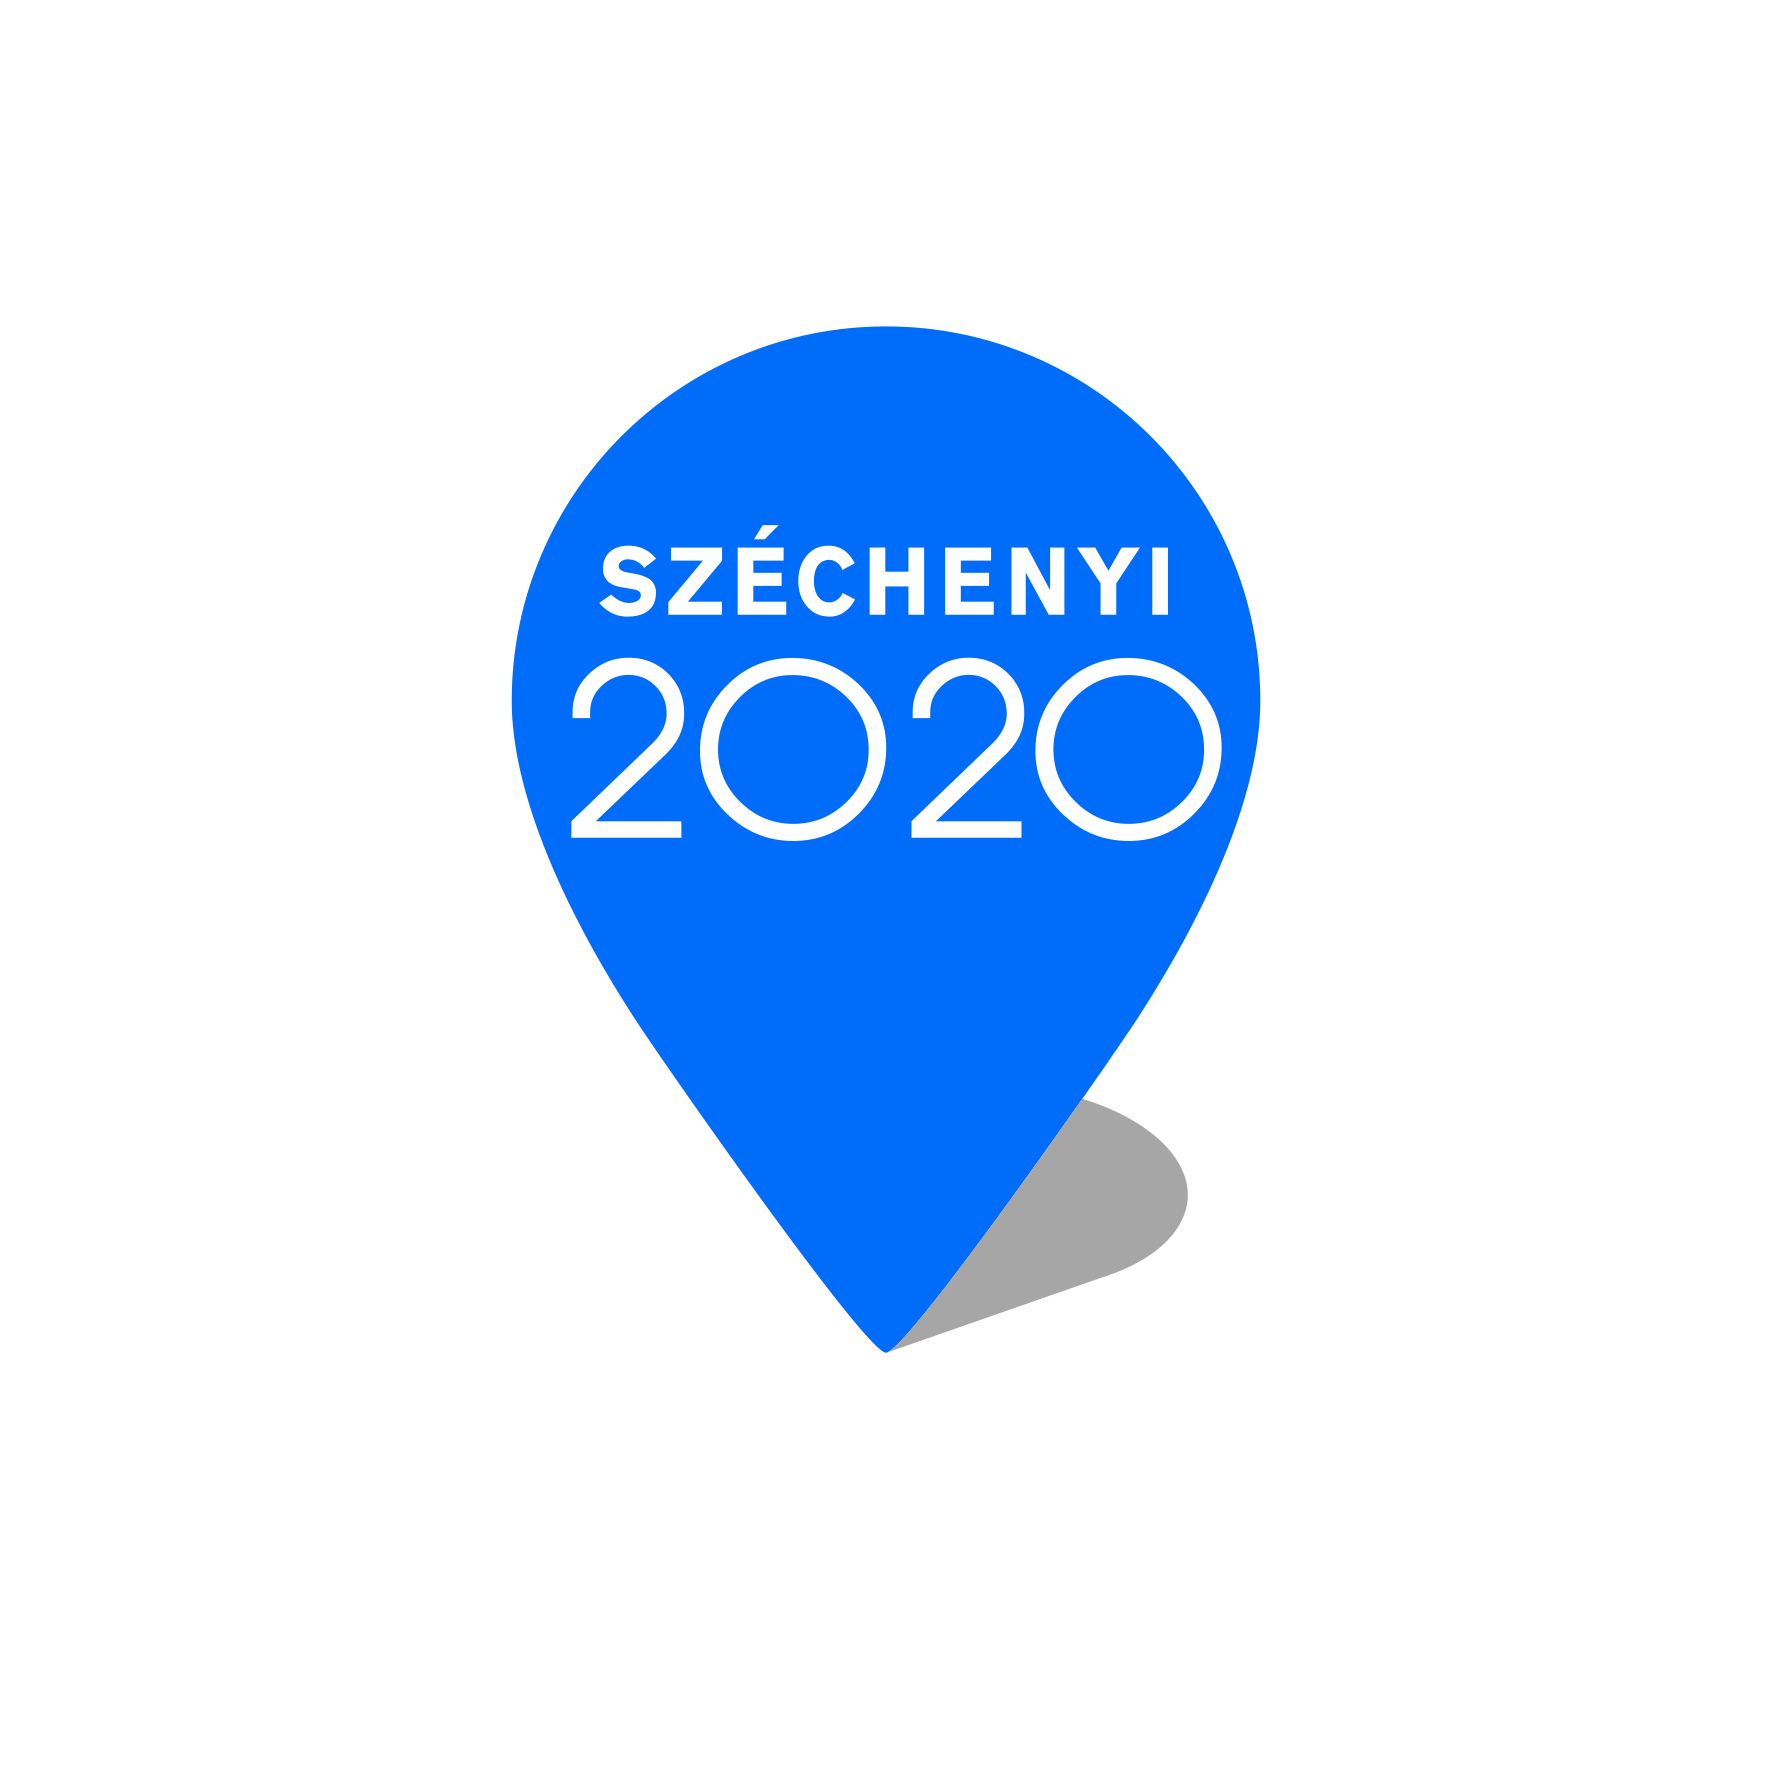 szechenyi_2020_logo_allo_color_nogradient_CMYK